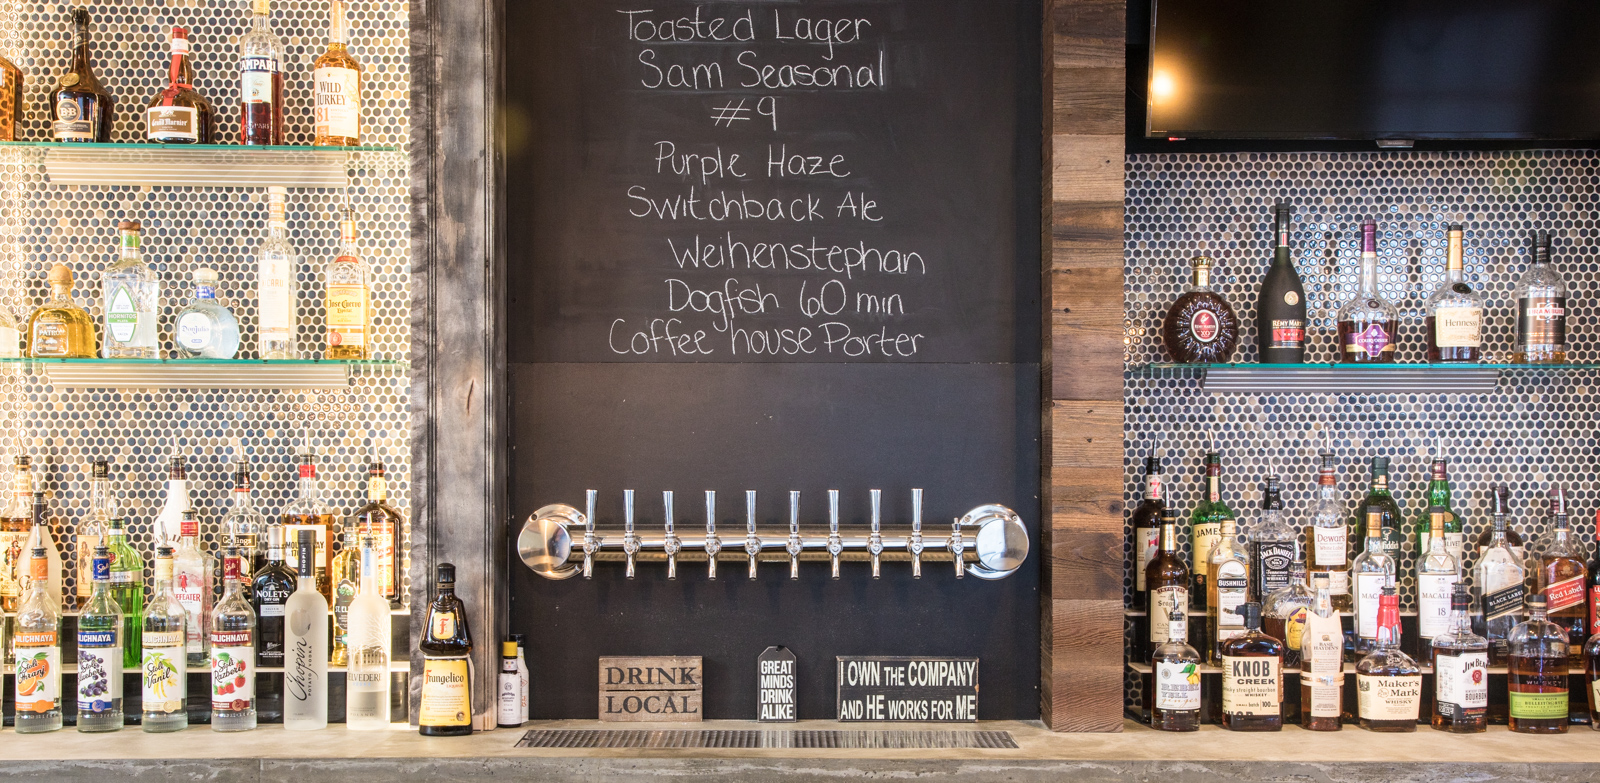 Modern Bar and Restaurant Interior Design, bar with chalkboard